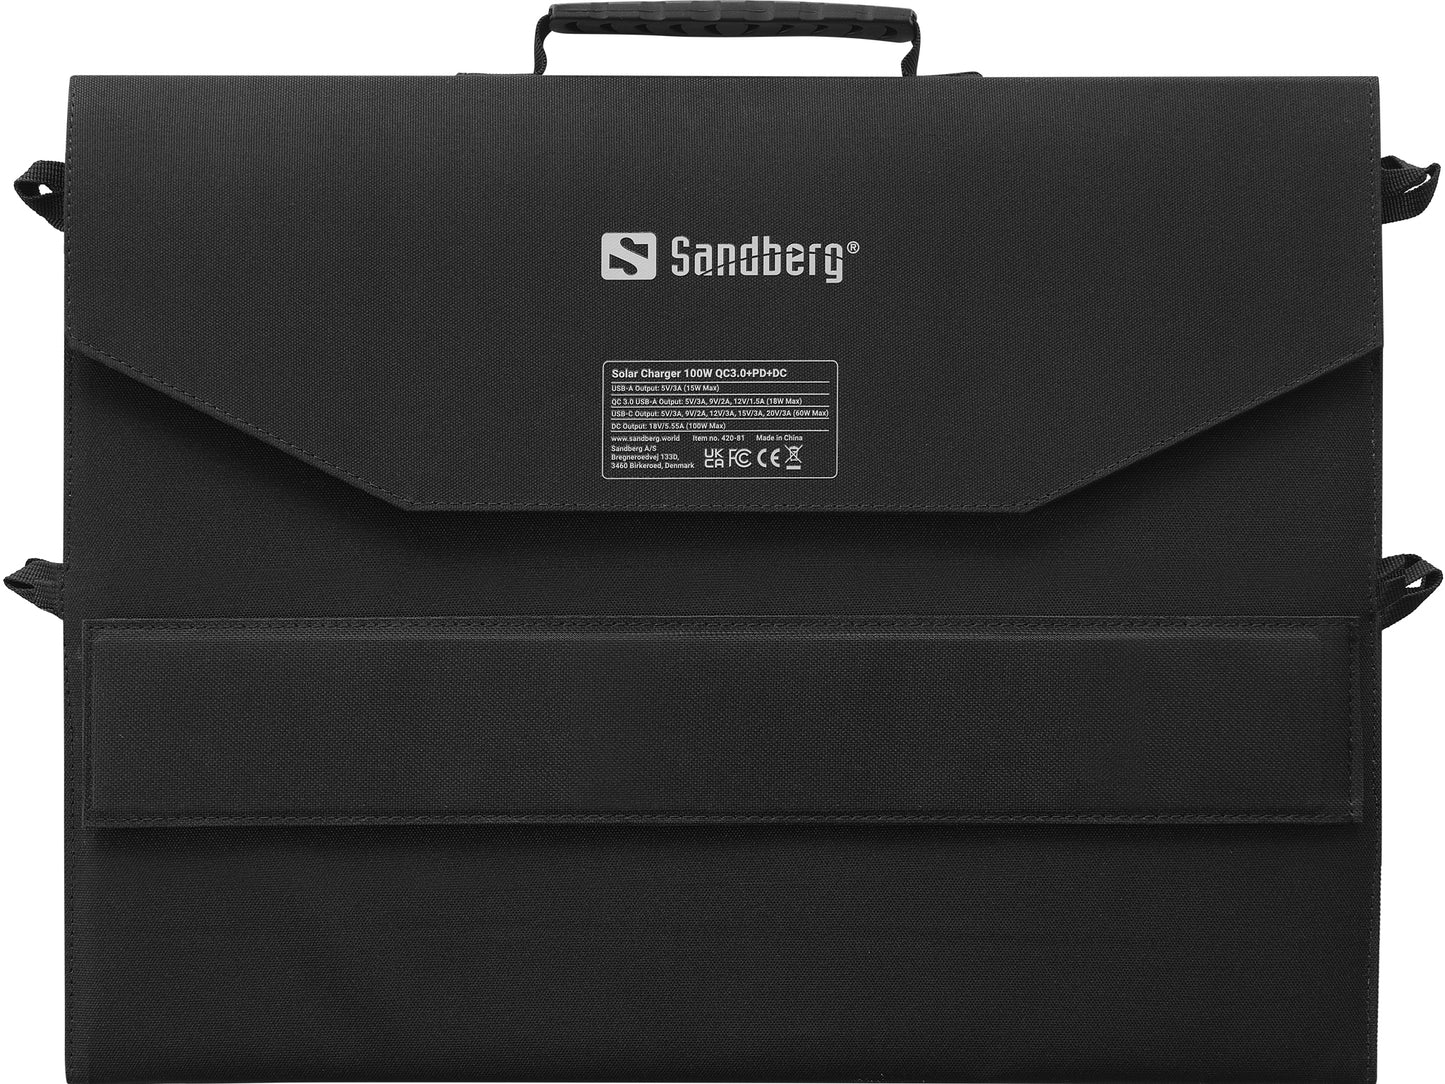 Sandberg 420-81 Solar Charger 100W QC3.0+PD+DC